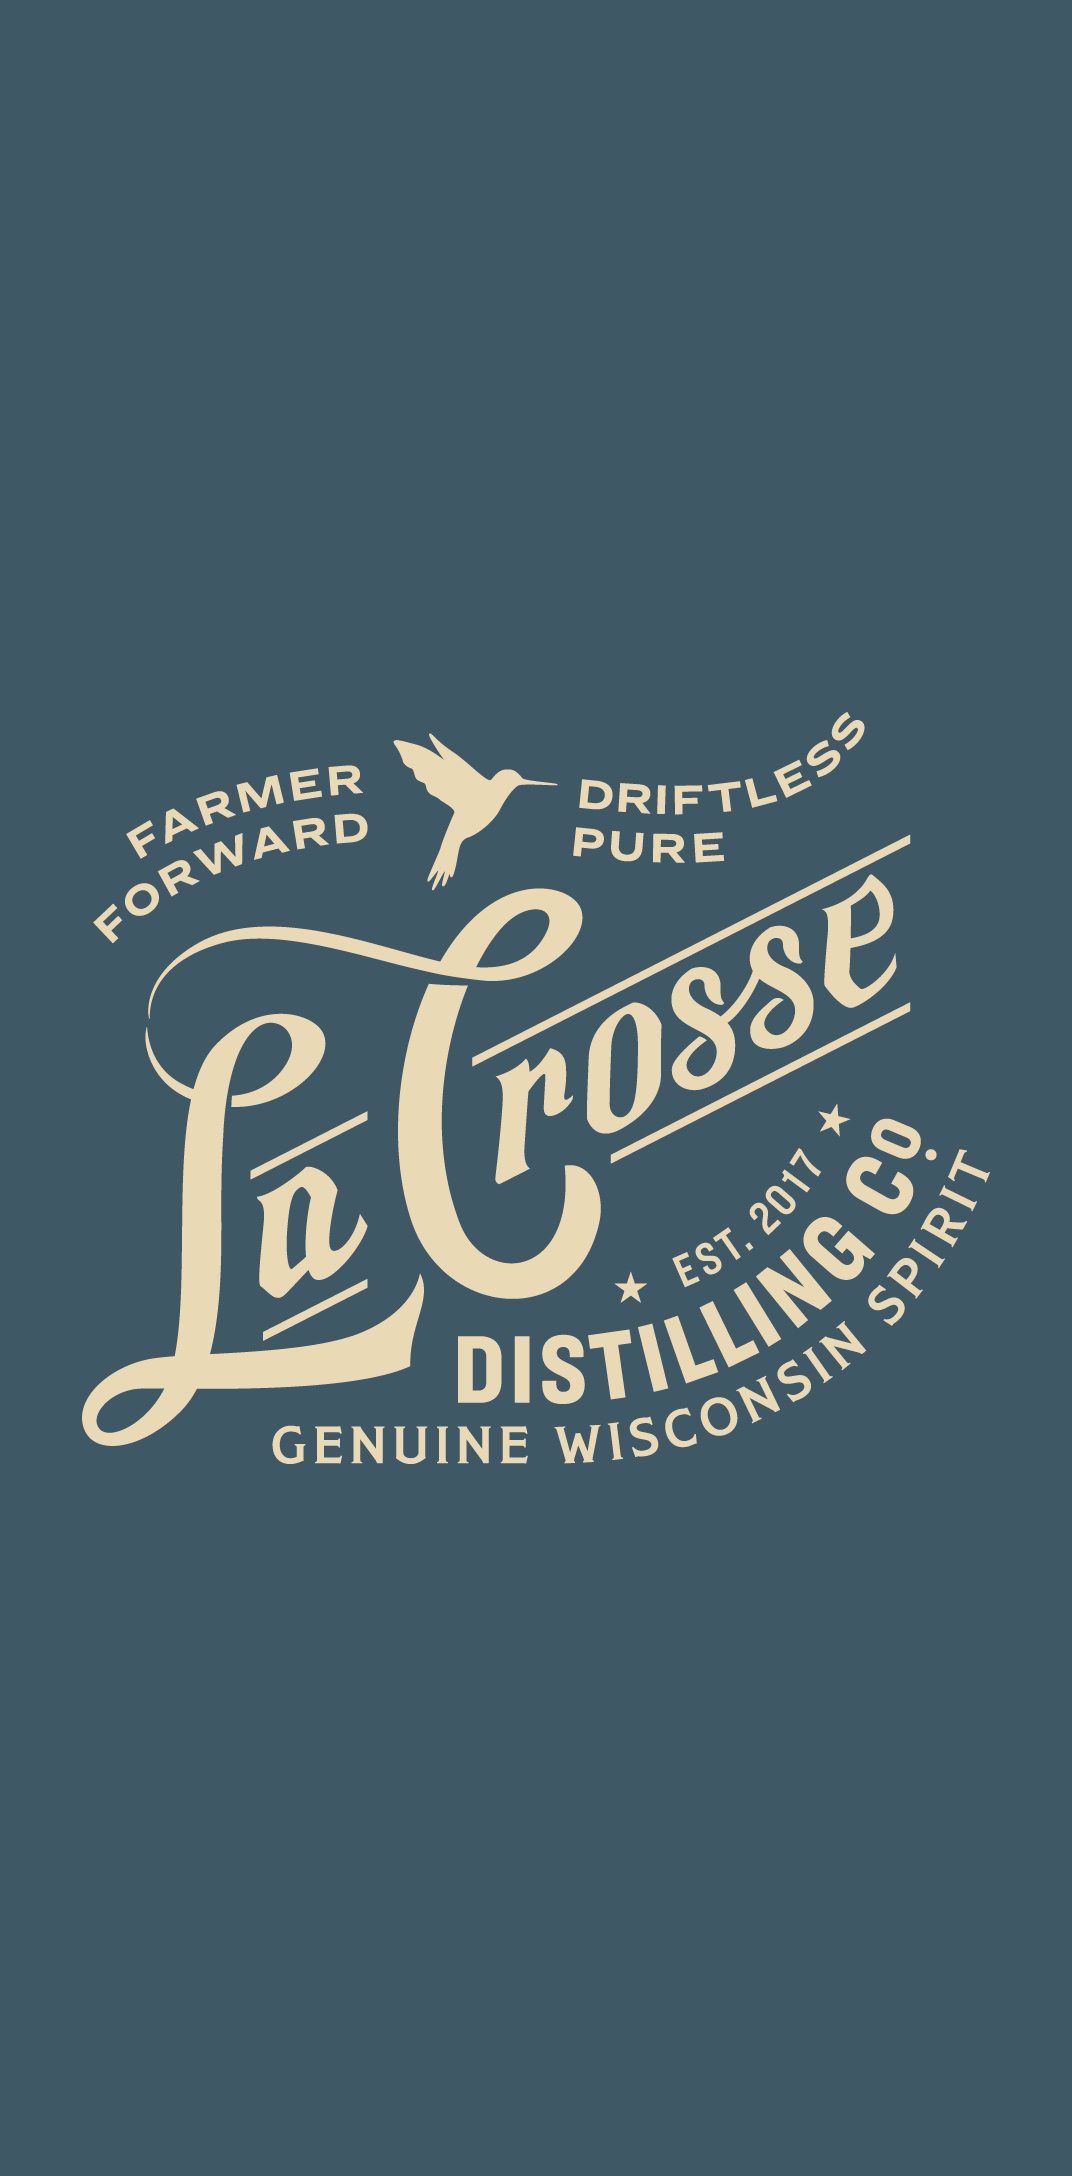 La Crosse Distilling Co. Logo Design